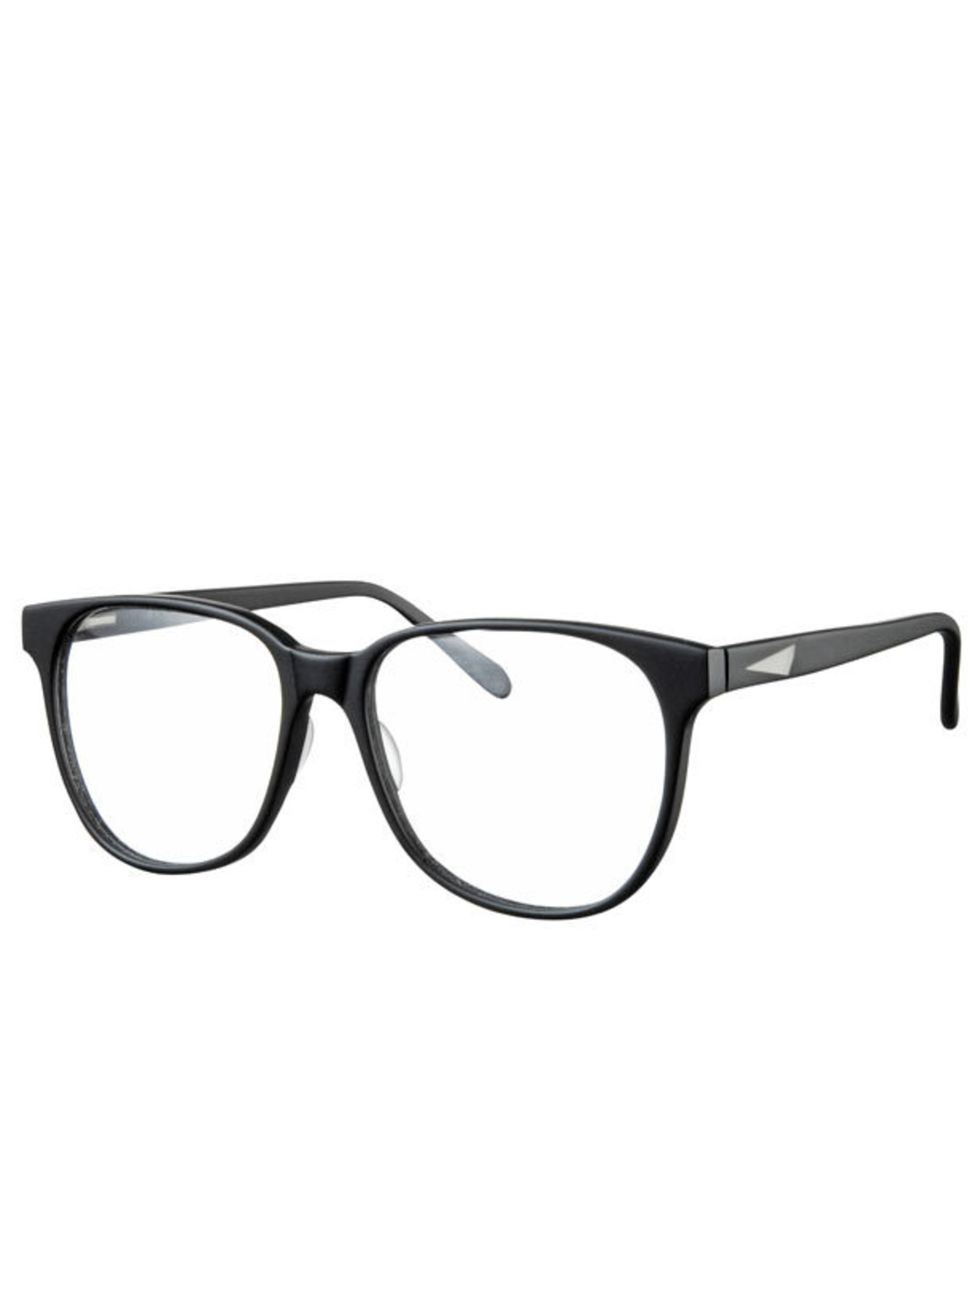 <p><a href="http://www.prismlondon.com/02_newyork_mattblack.html">Prism London</a> New York glasses in matt black, £205</p>